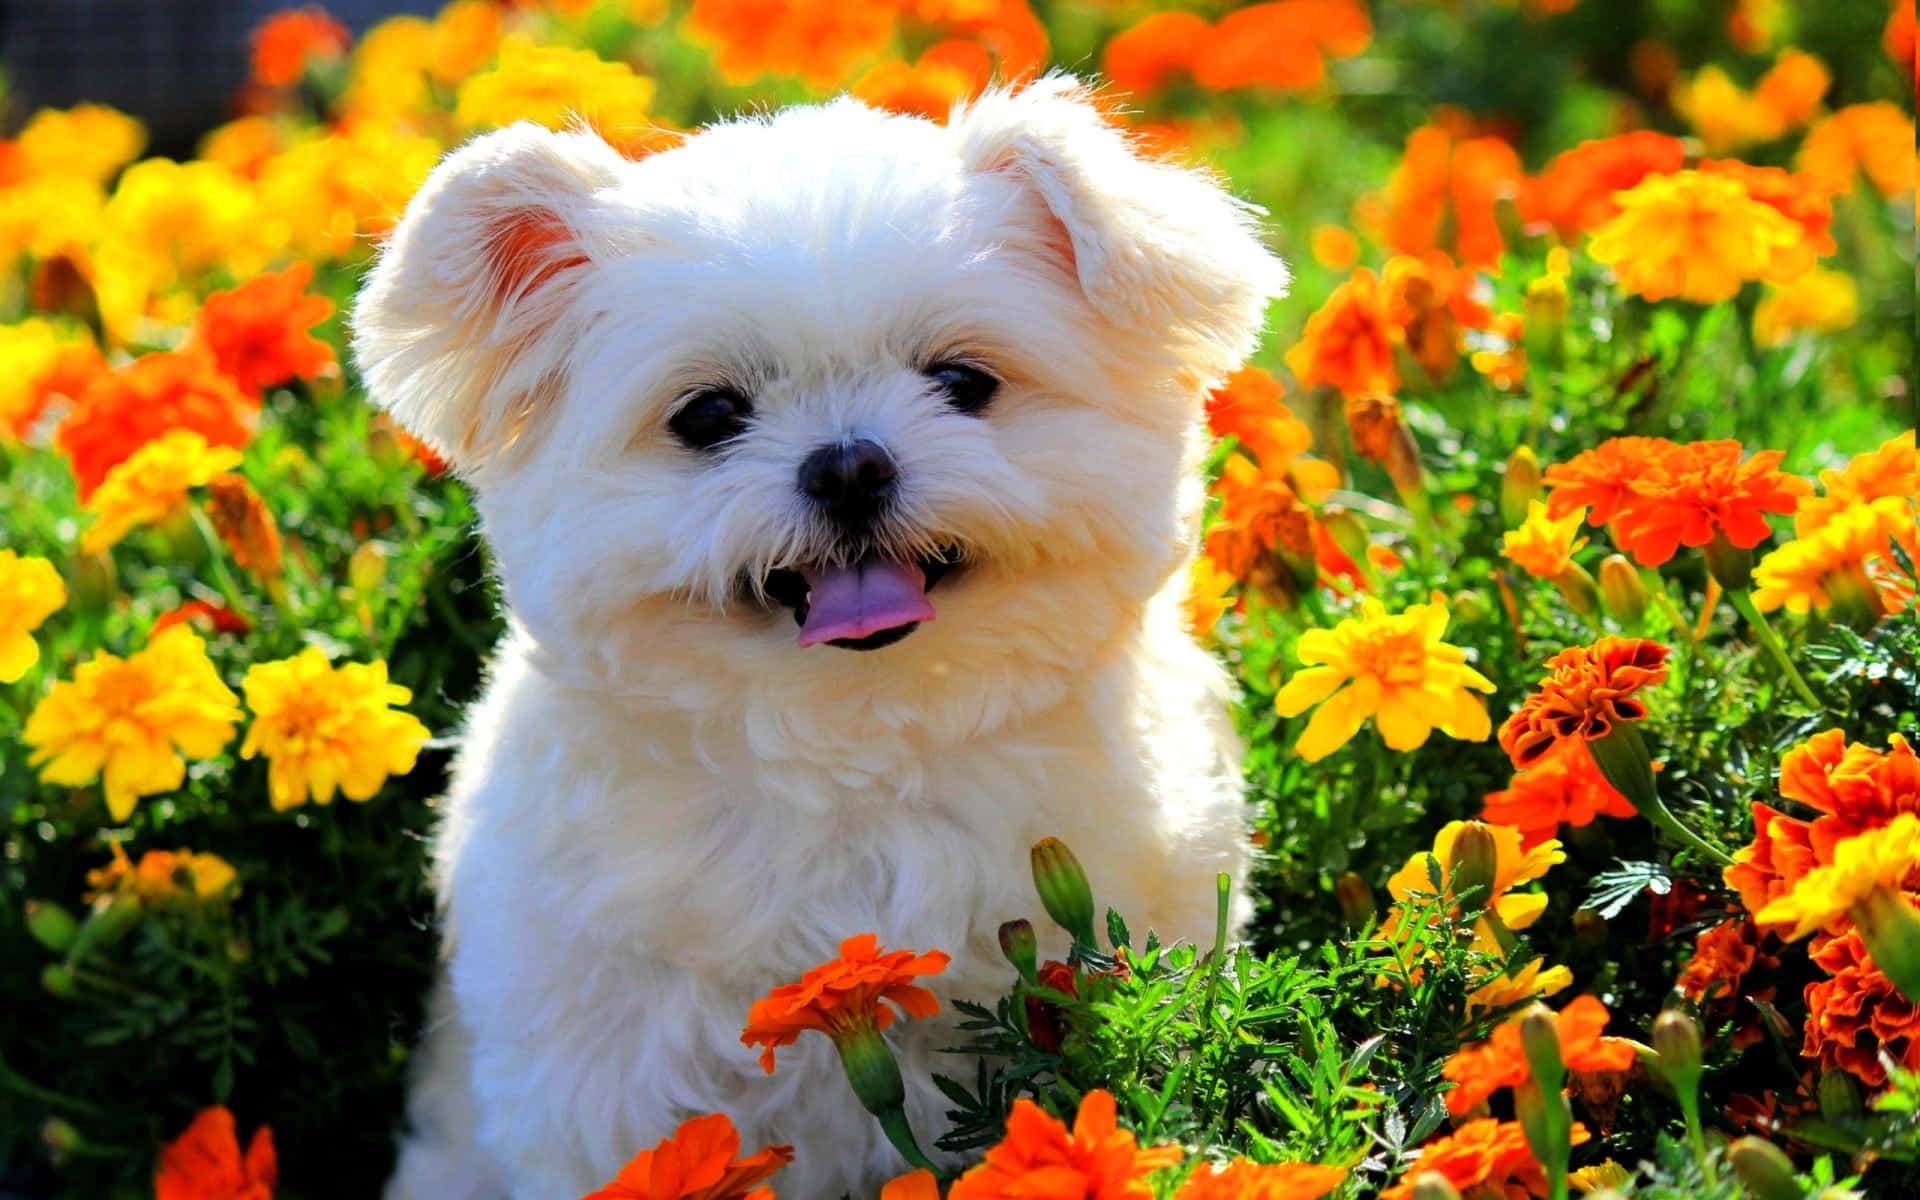 Shih Tzu Smiling In A Garden Of Flowers Wallpaper